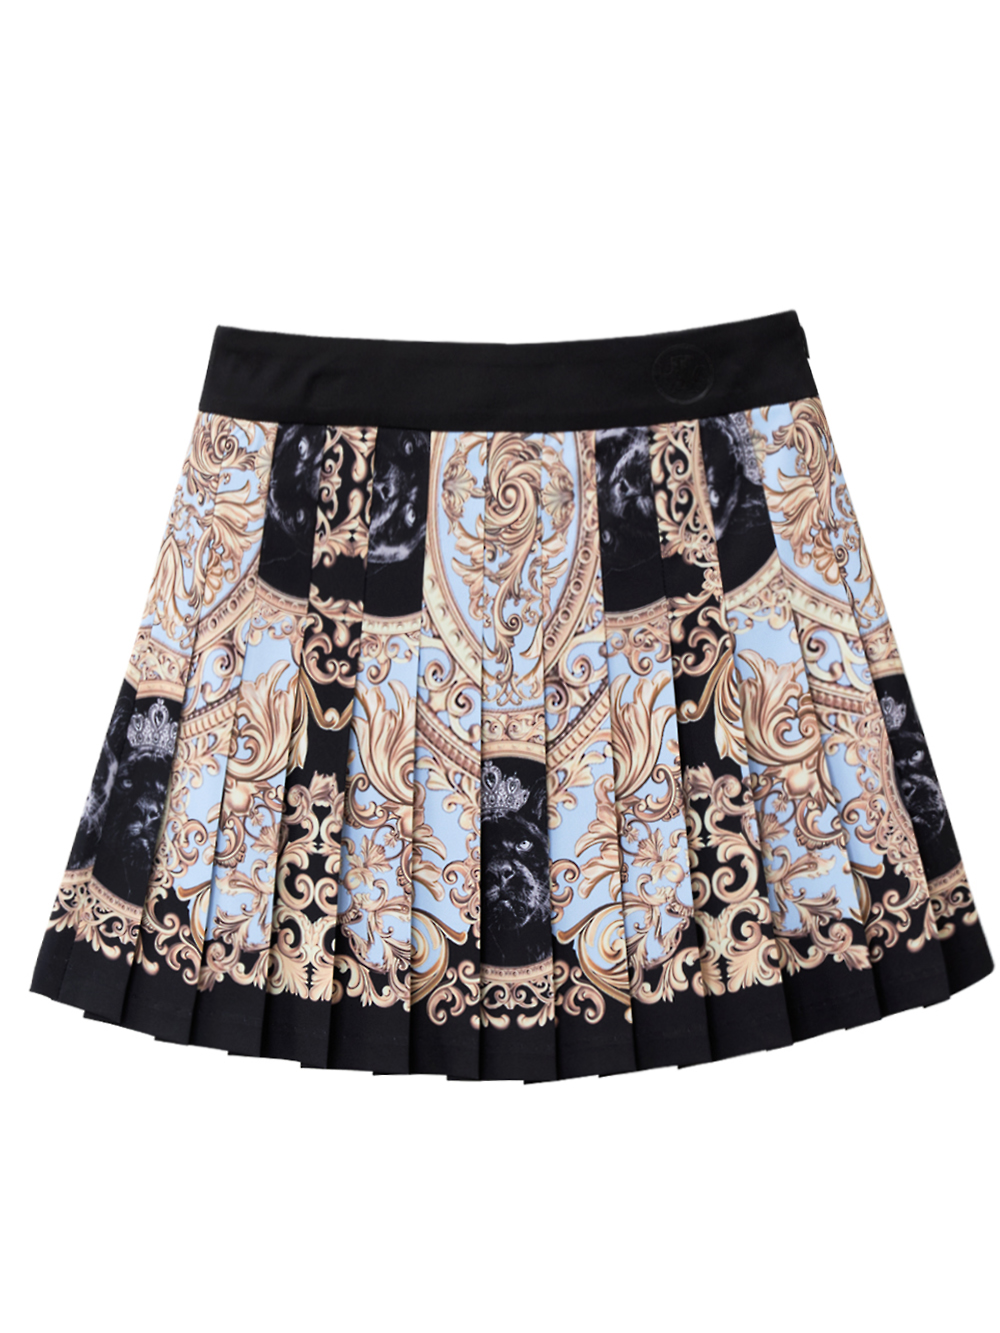 UTAA Folding Baroque Pleats Skirt : Black (UB2SKF302BK)